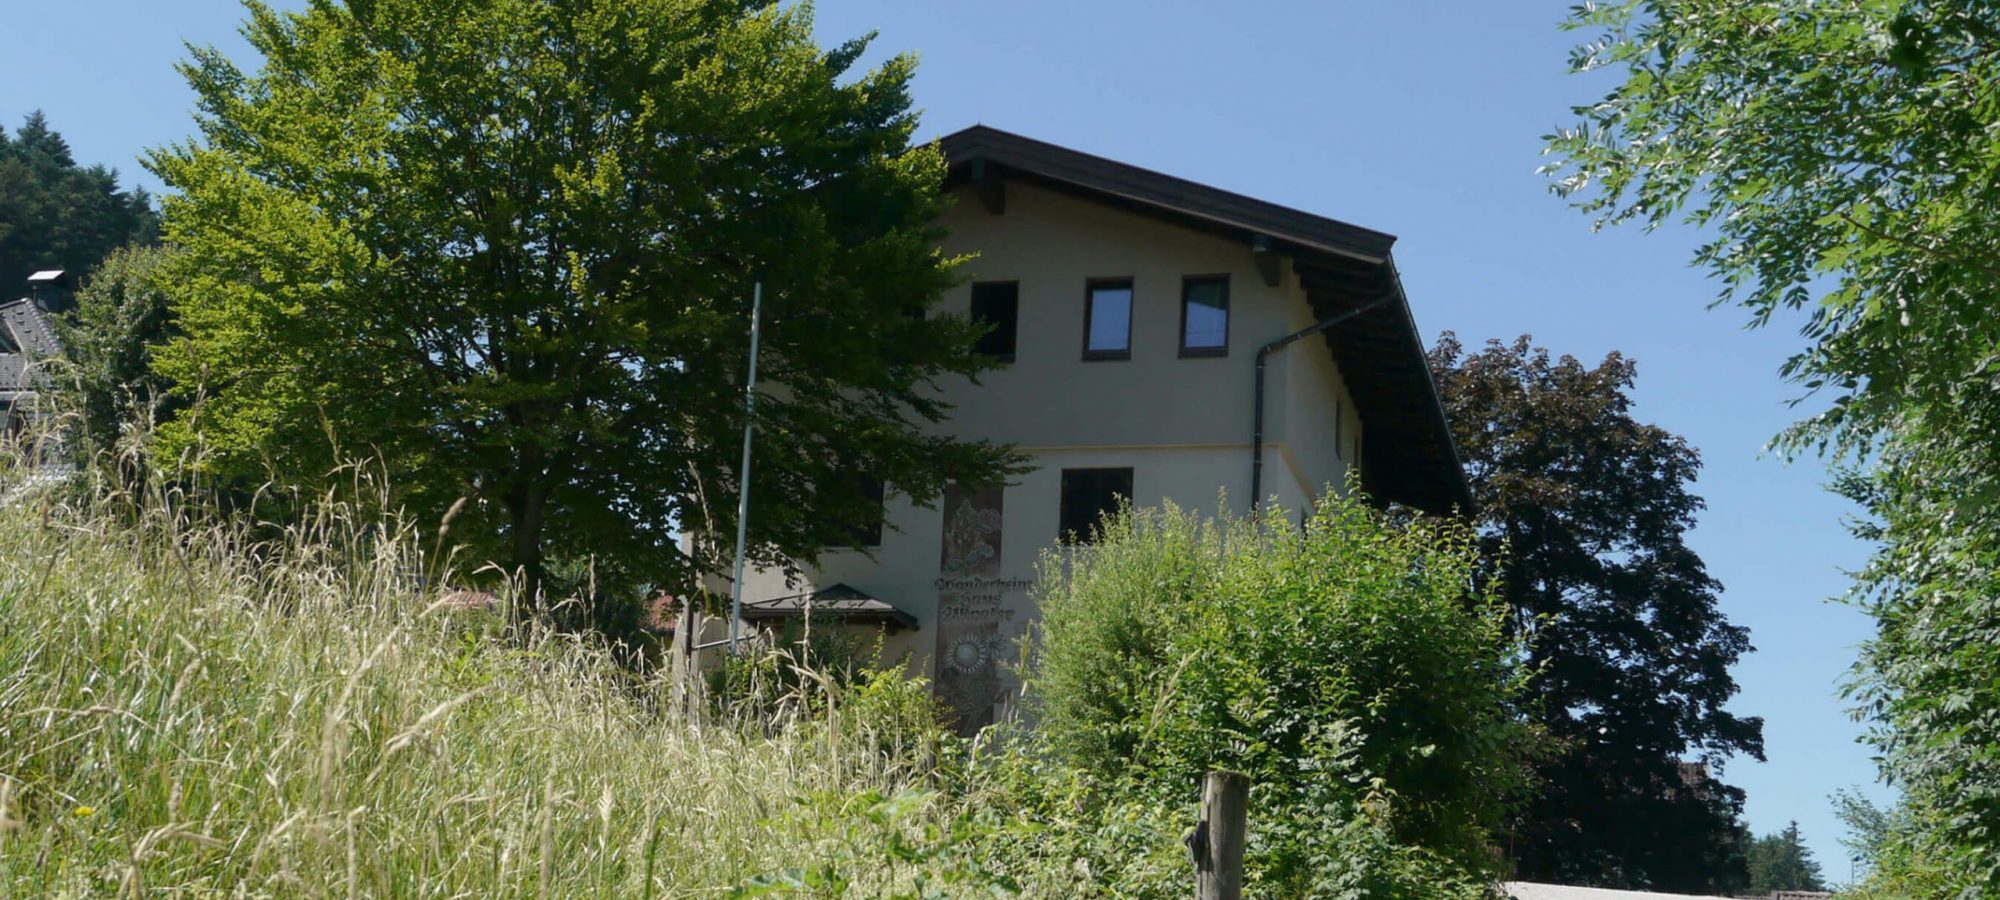 Wanderheim MSSGV Haus Altvater